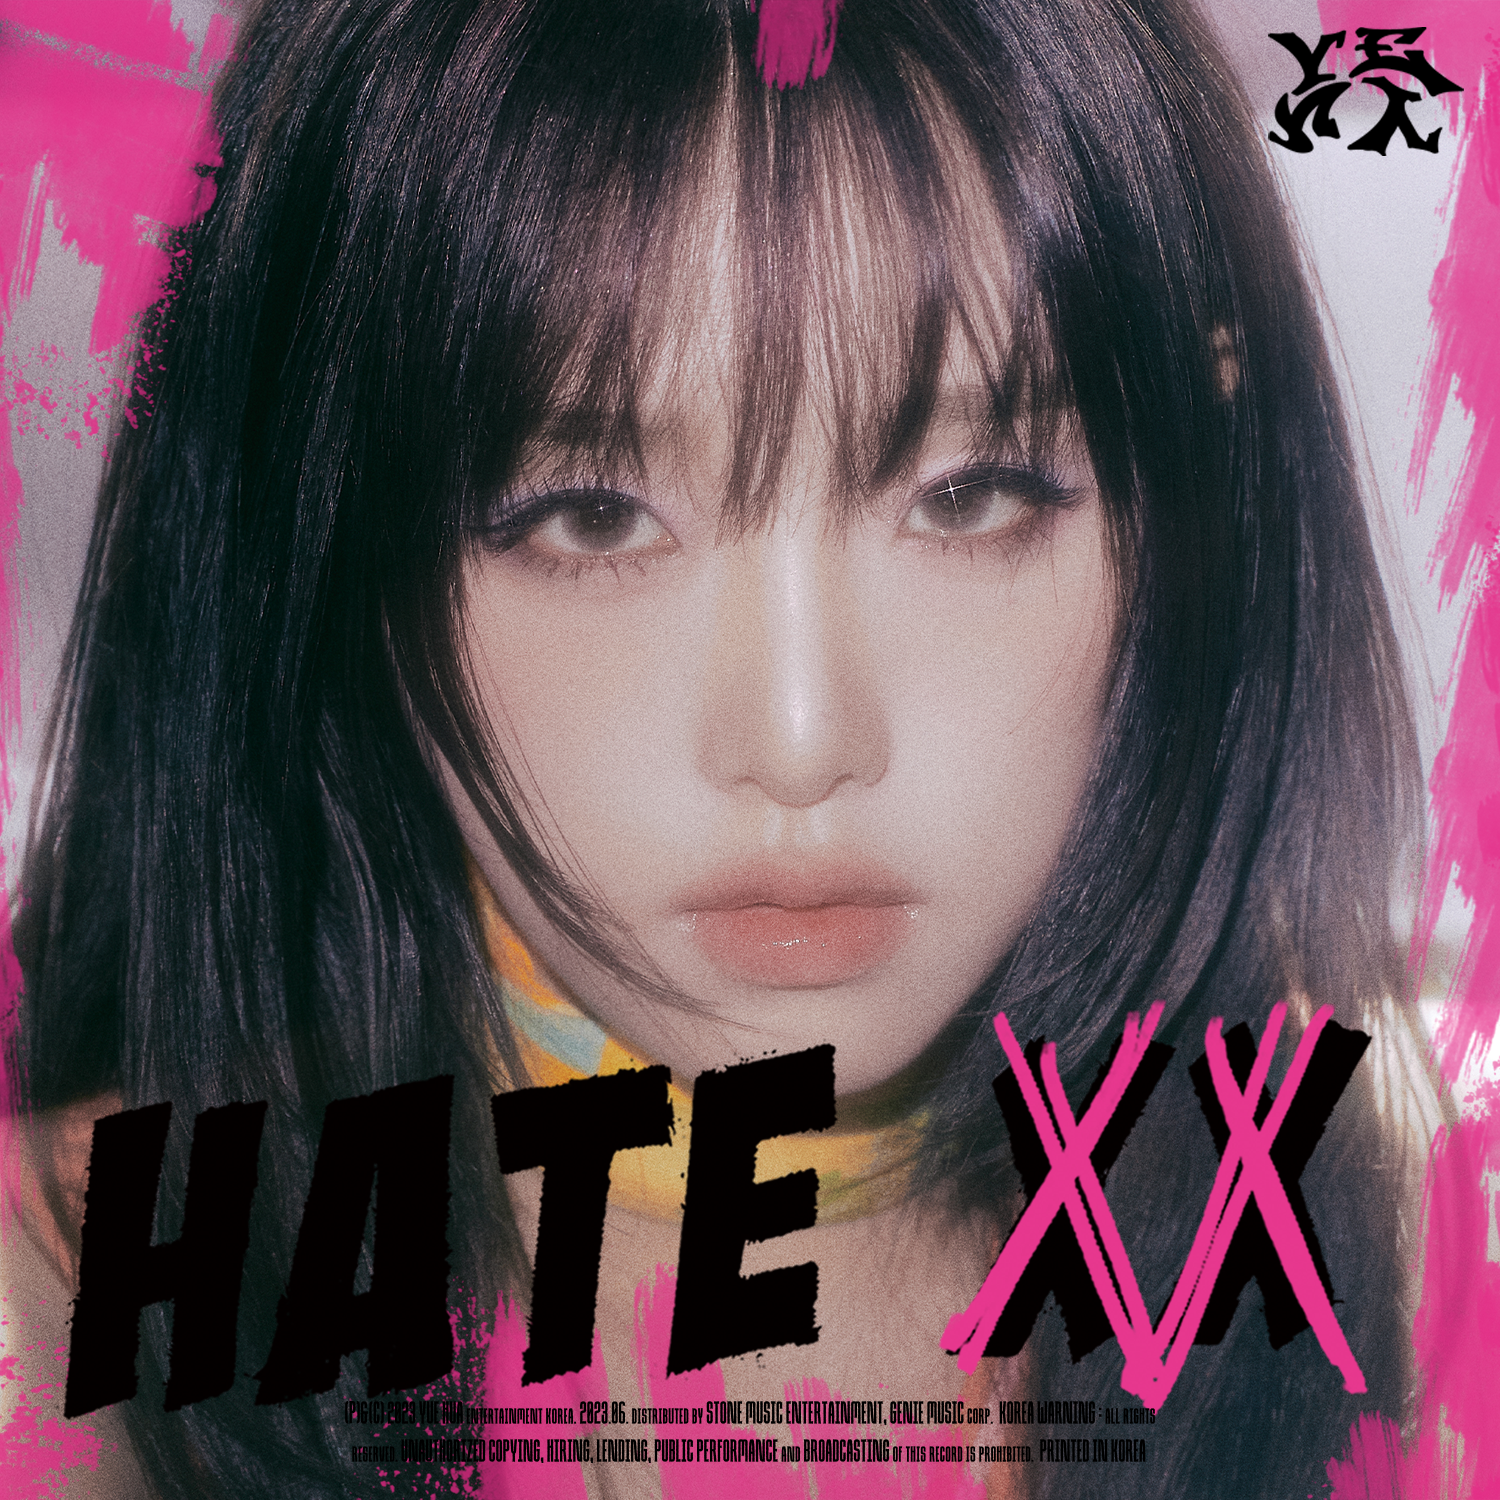 YENA HATE XX cover artwork